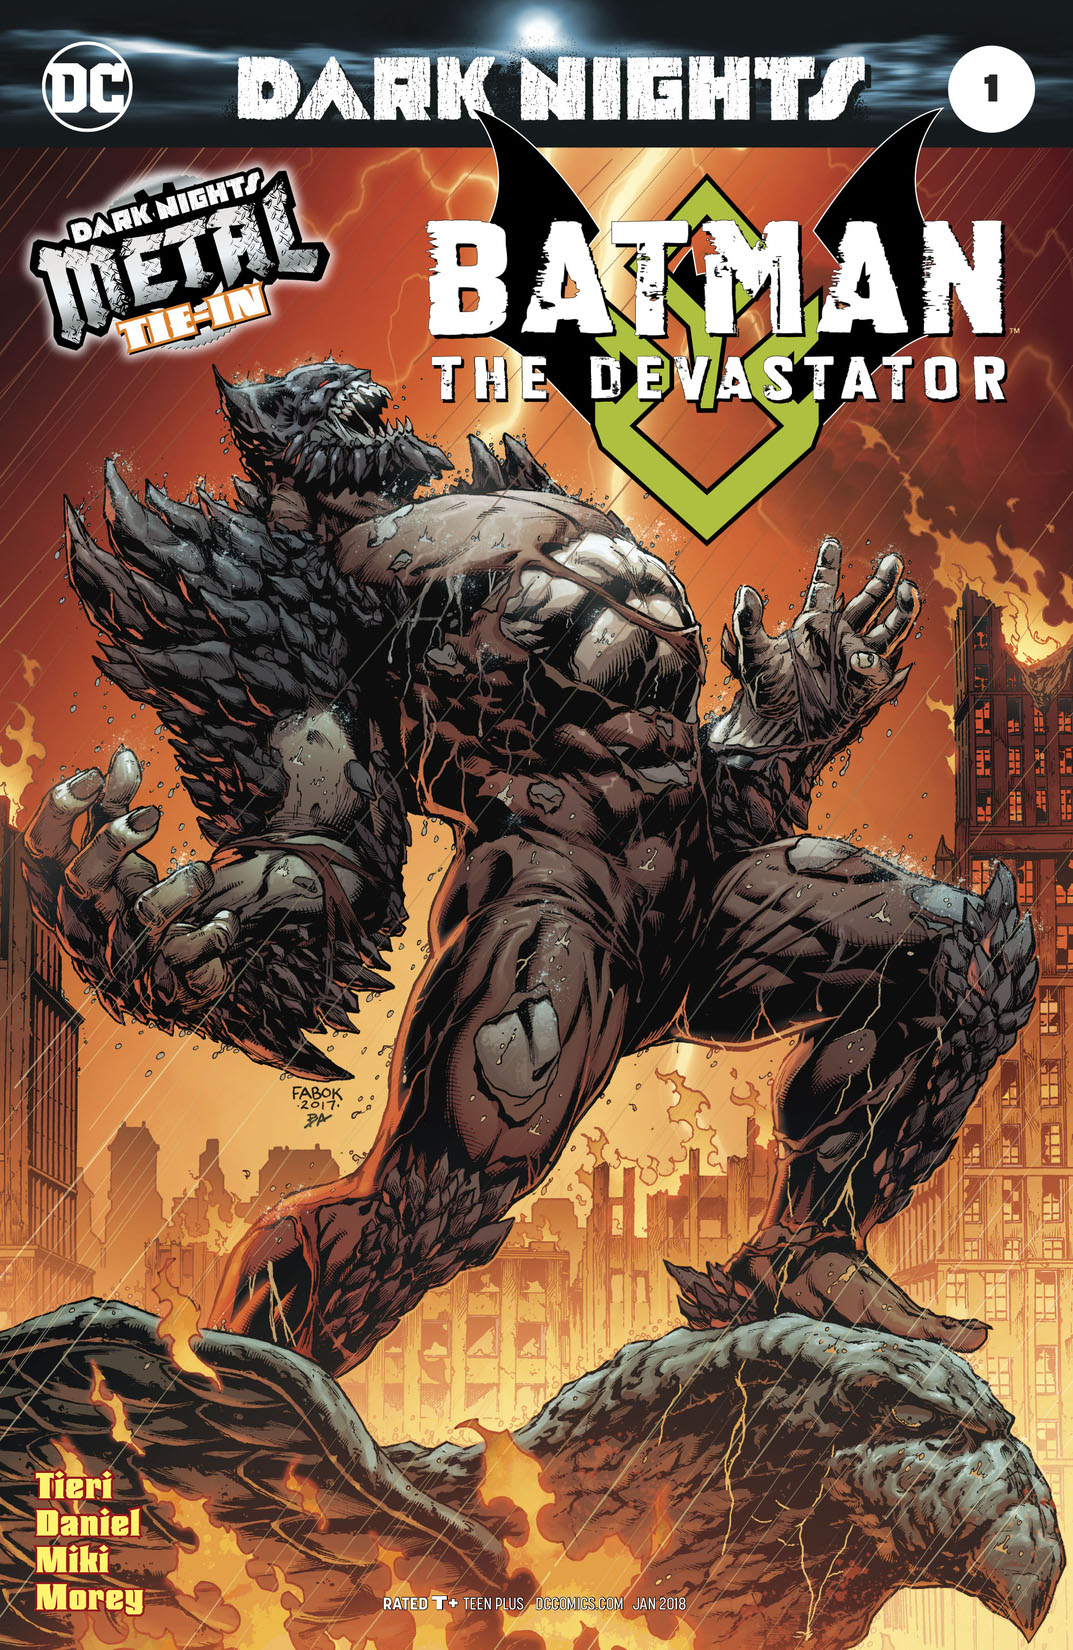 Batman: The Devastator #1 preview images